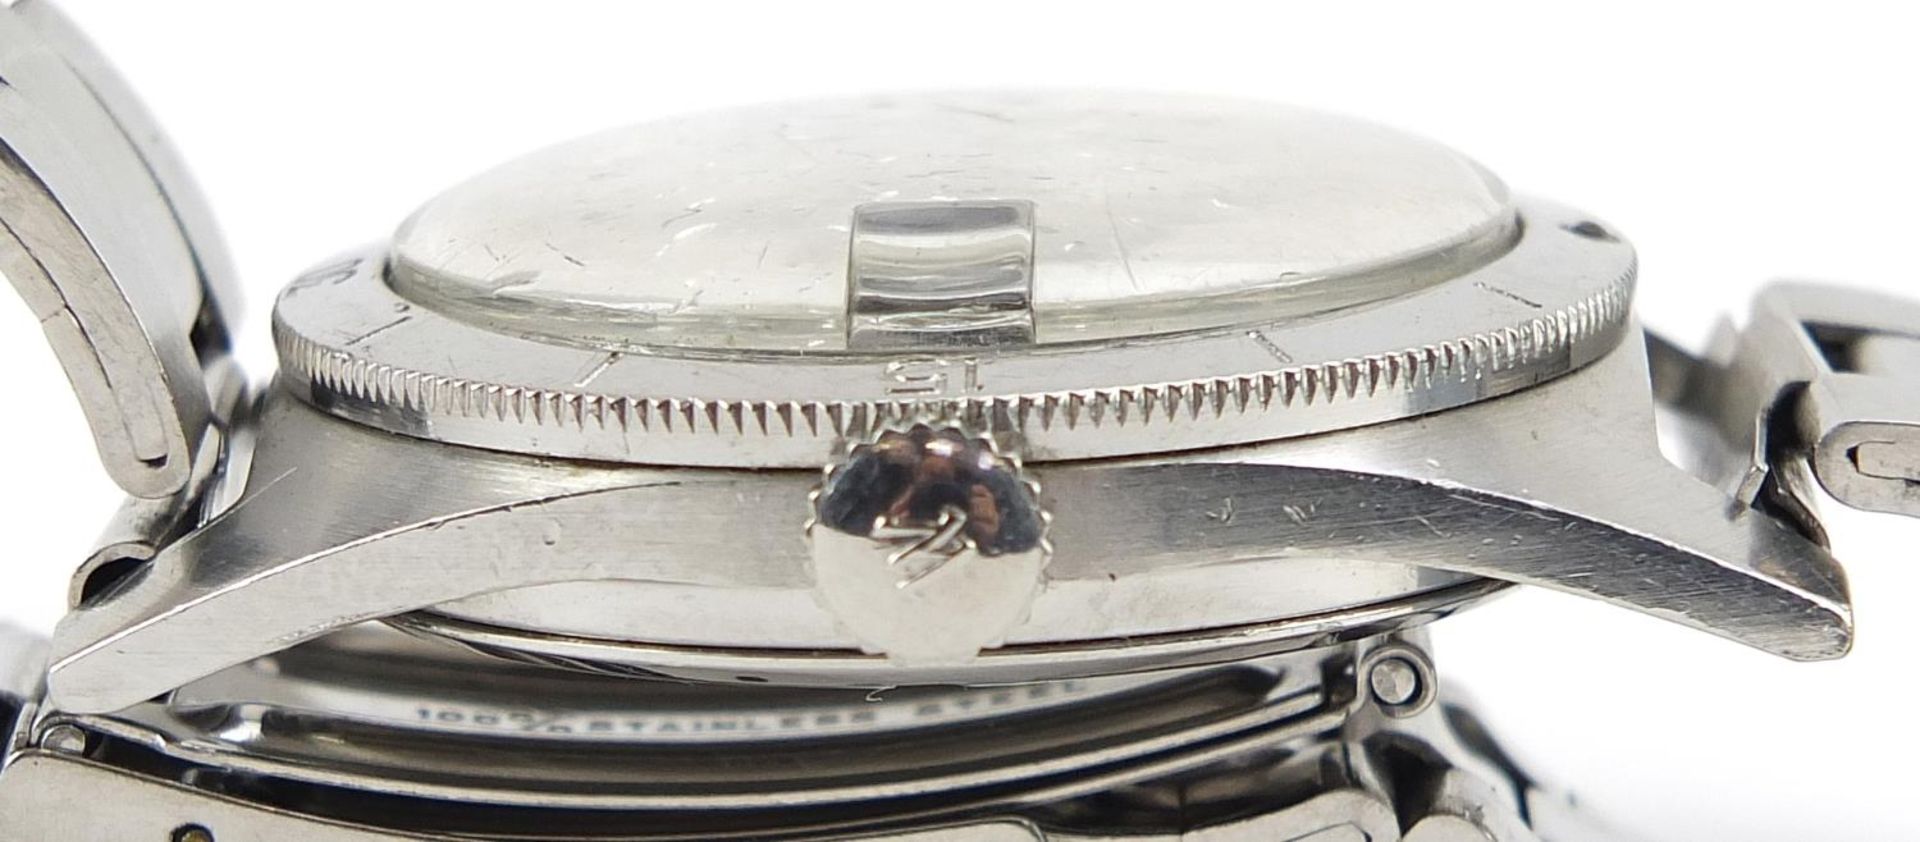 Marc Nicolet, gentlemen's Skin Diver automatic wristwatch with date aperture, 35mm in diameter - Image 5 of 5